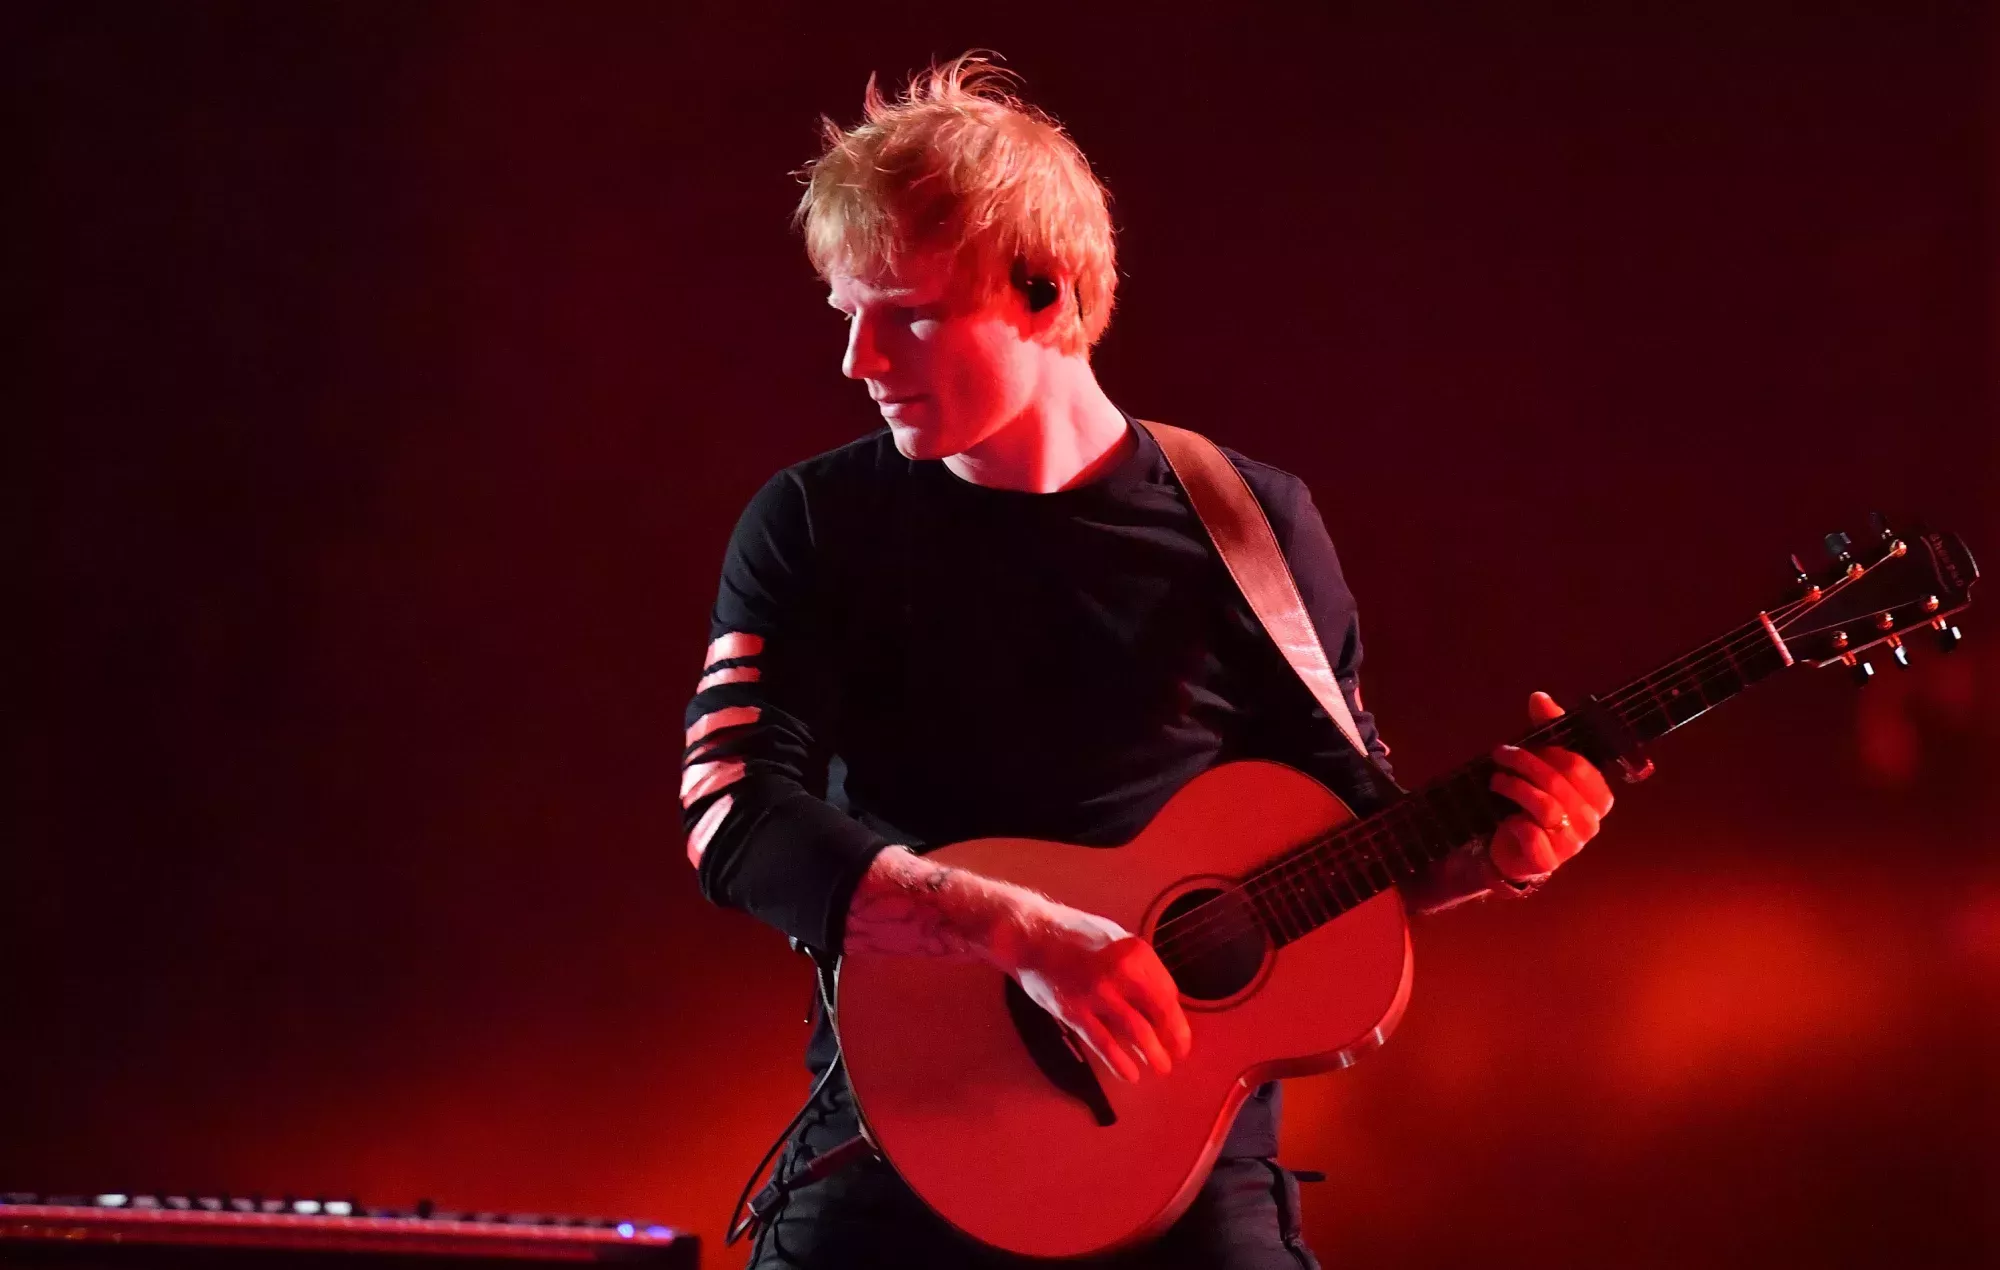 Ed Sheeran ya tiene preparado otro nuevo disco, revela su representante